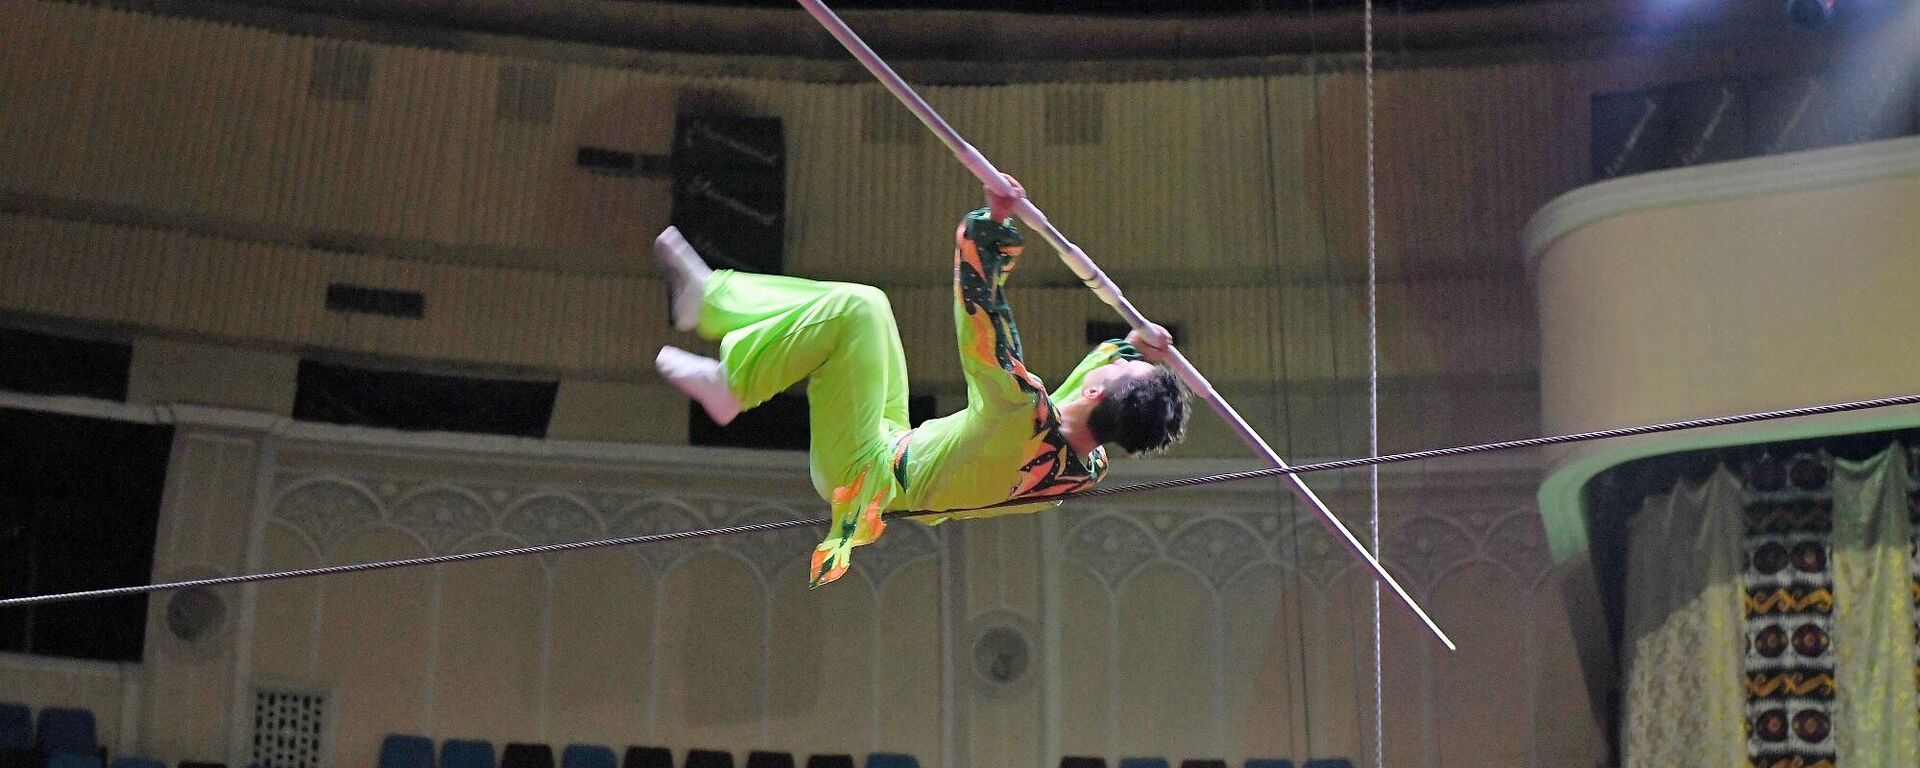 Трюк на канате - фестиваль циркового искусства в Ташкенте - Sputnik Узбекистан, 1920, 17.04.2021